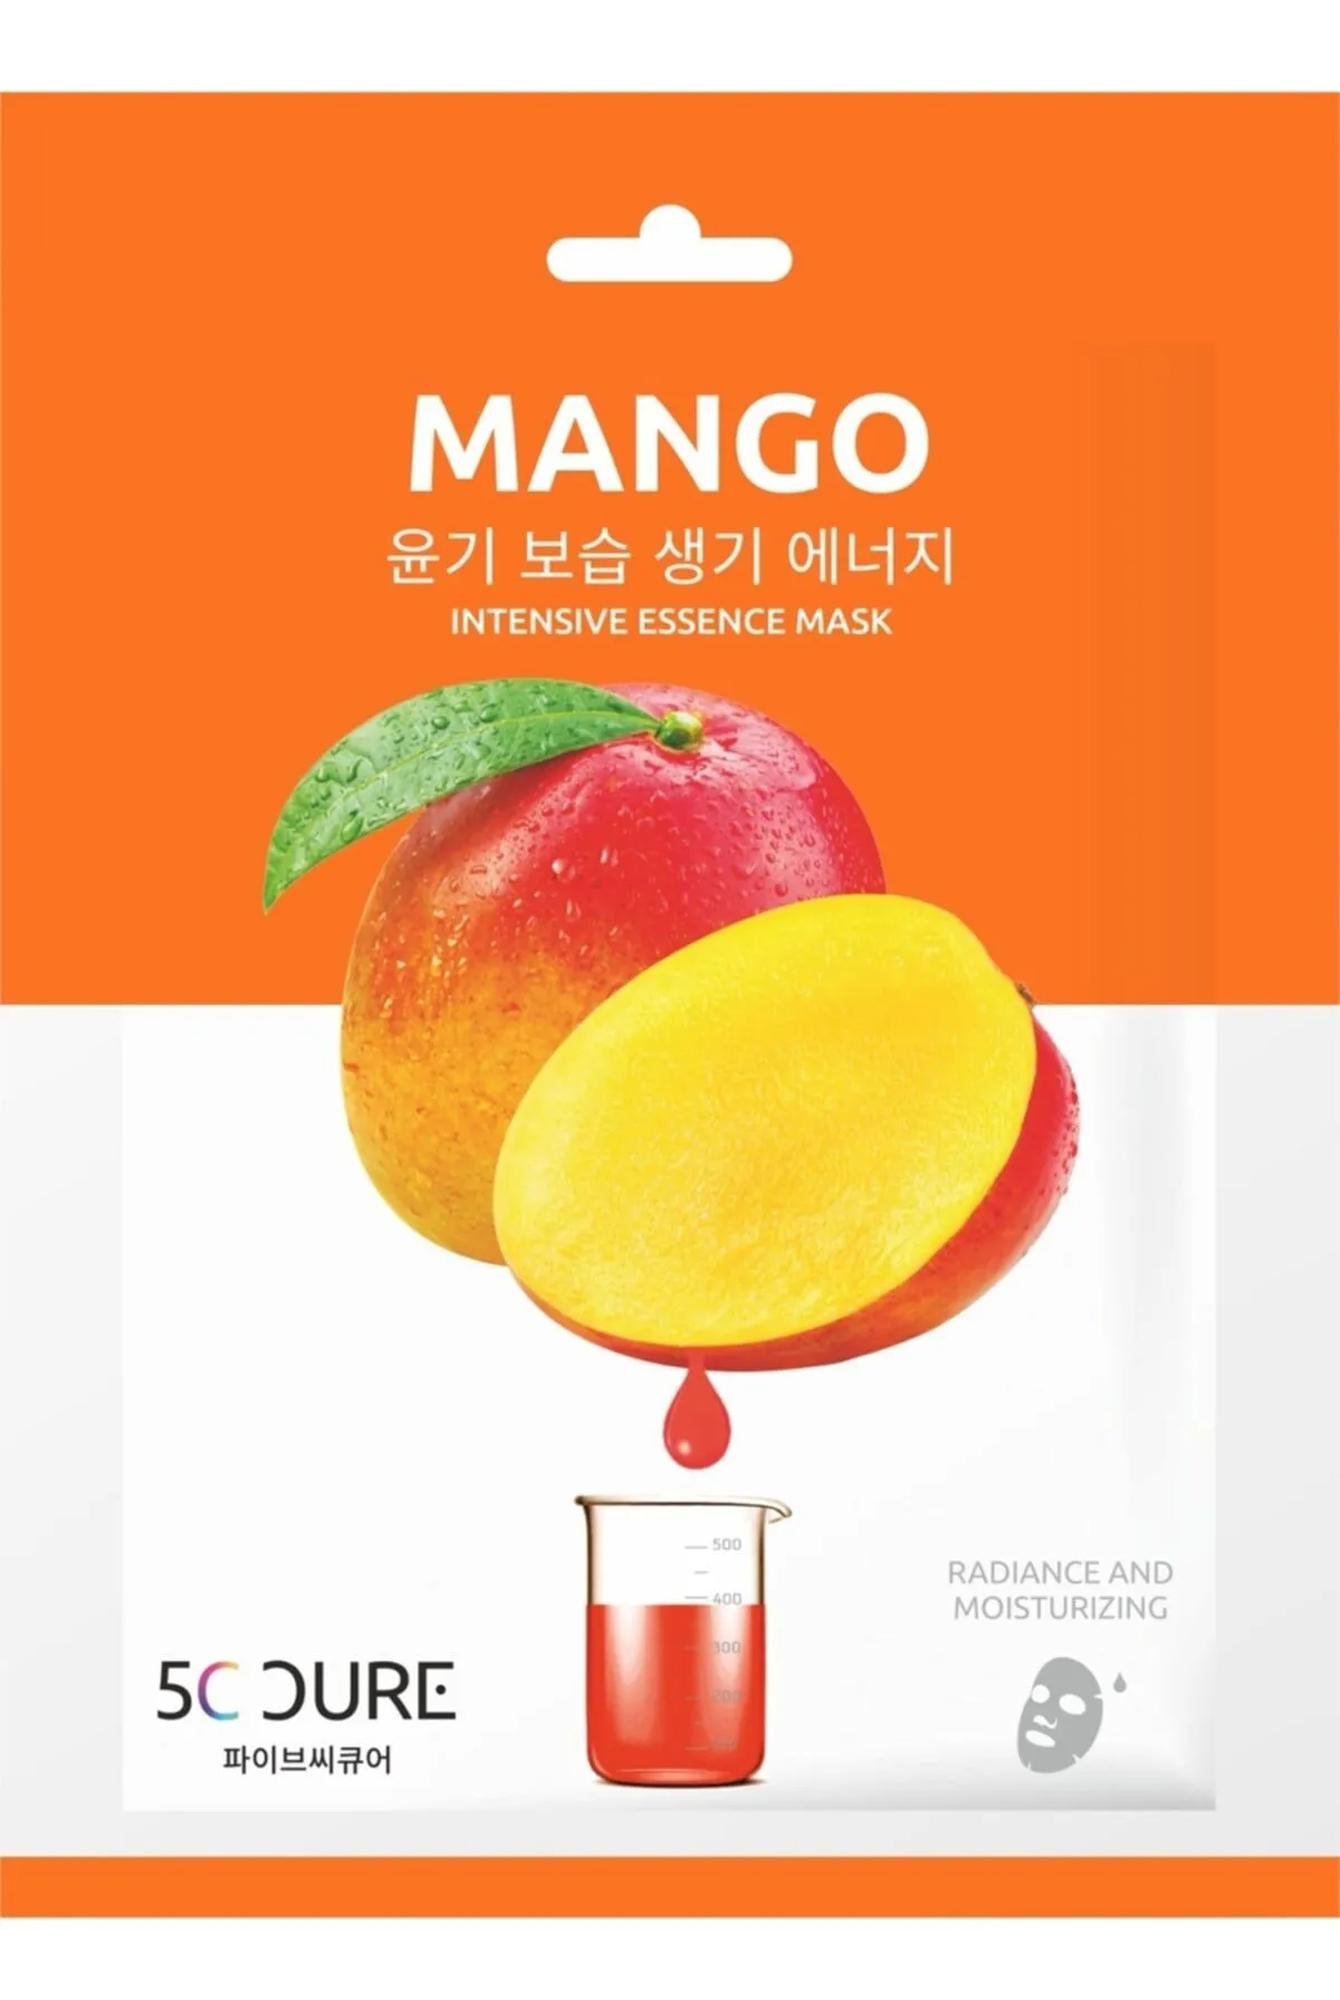  5C Cure Mango Intensive Essence Mask